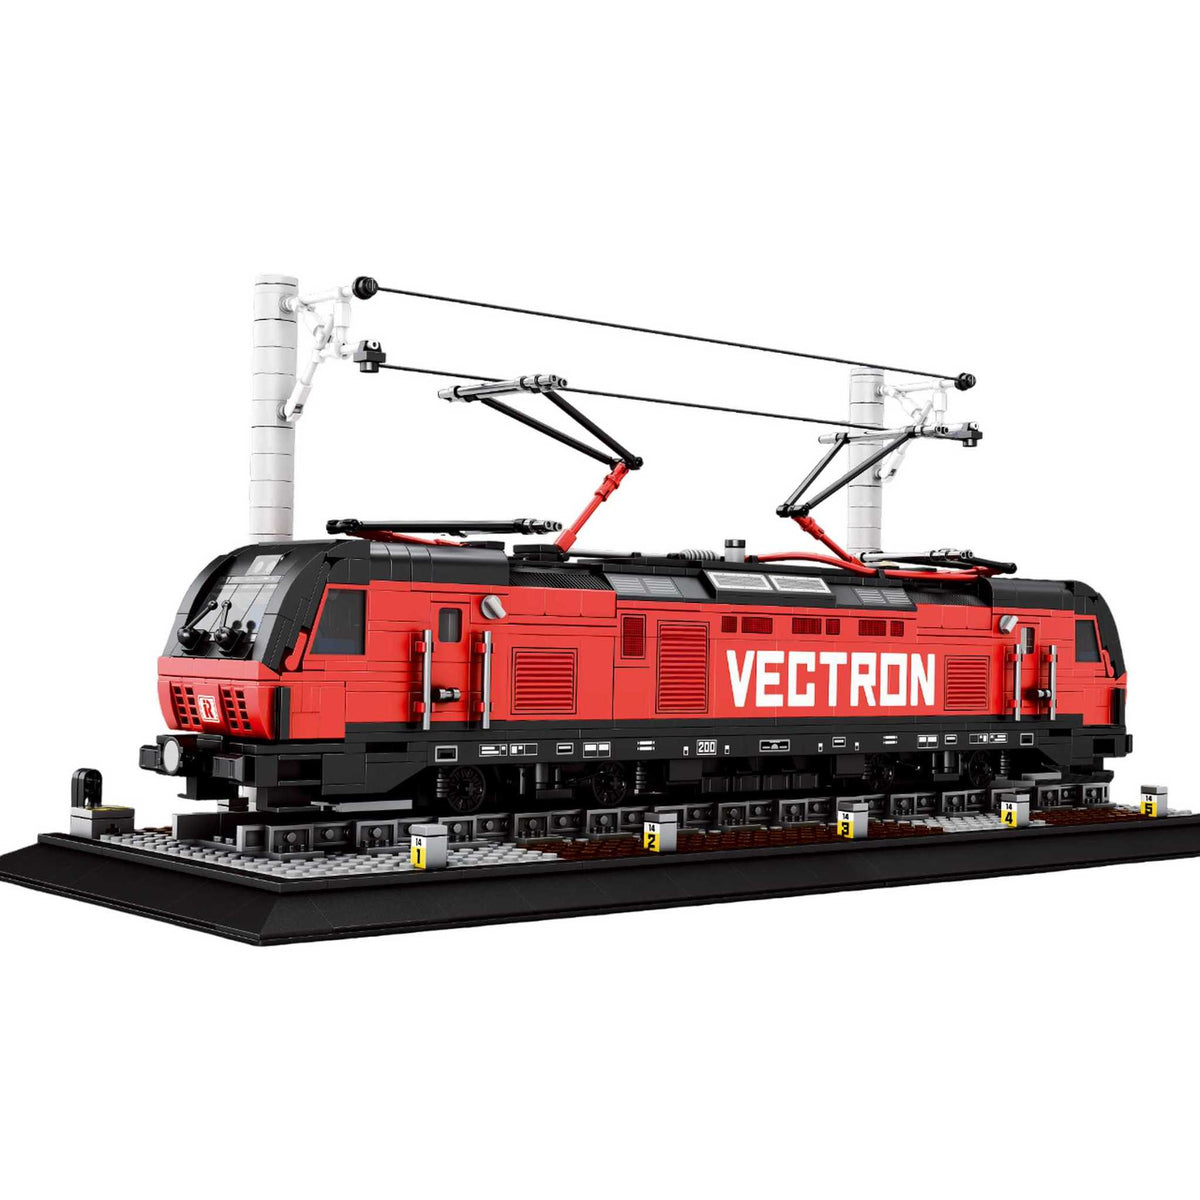 66019a - Vectron Lokomotive (Reobrix)